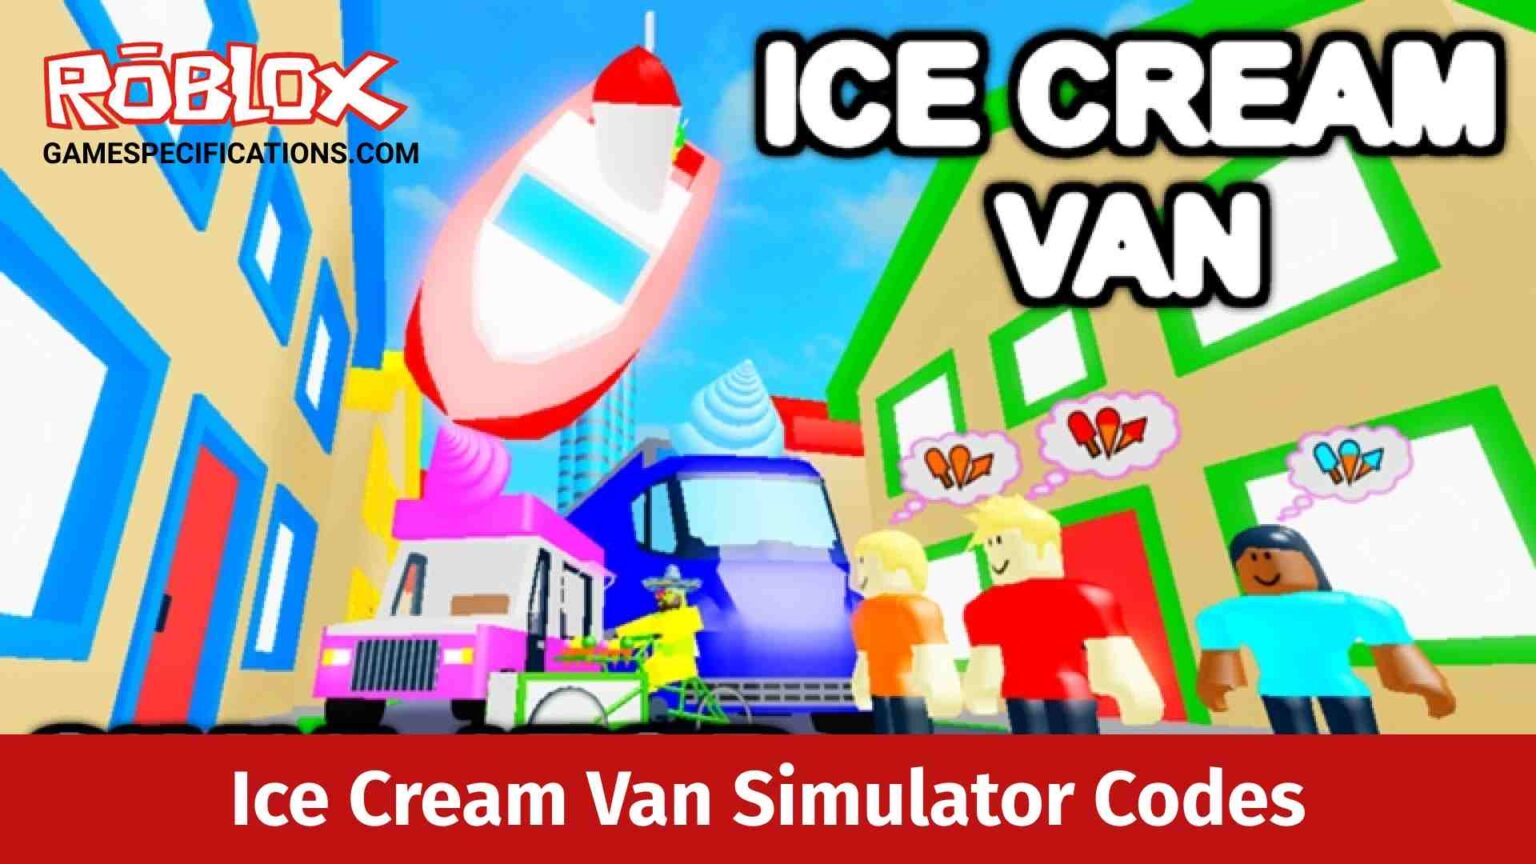 70-working-roblox-ice-cream-van-simulator-codes-2022-game-specifications